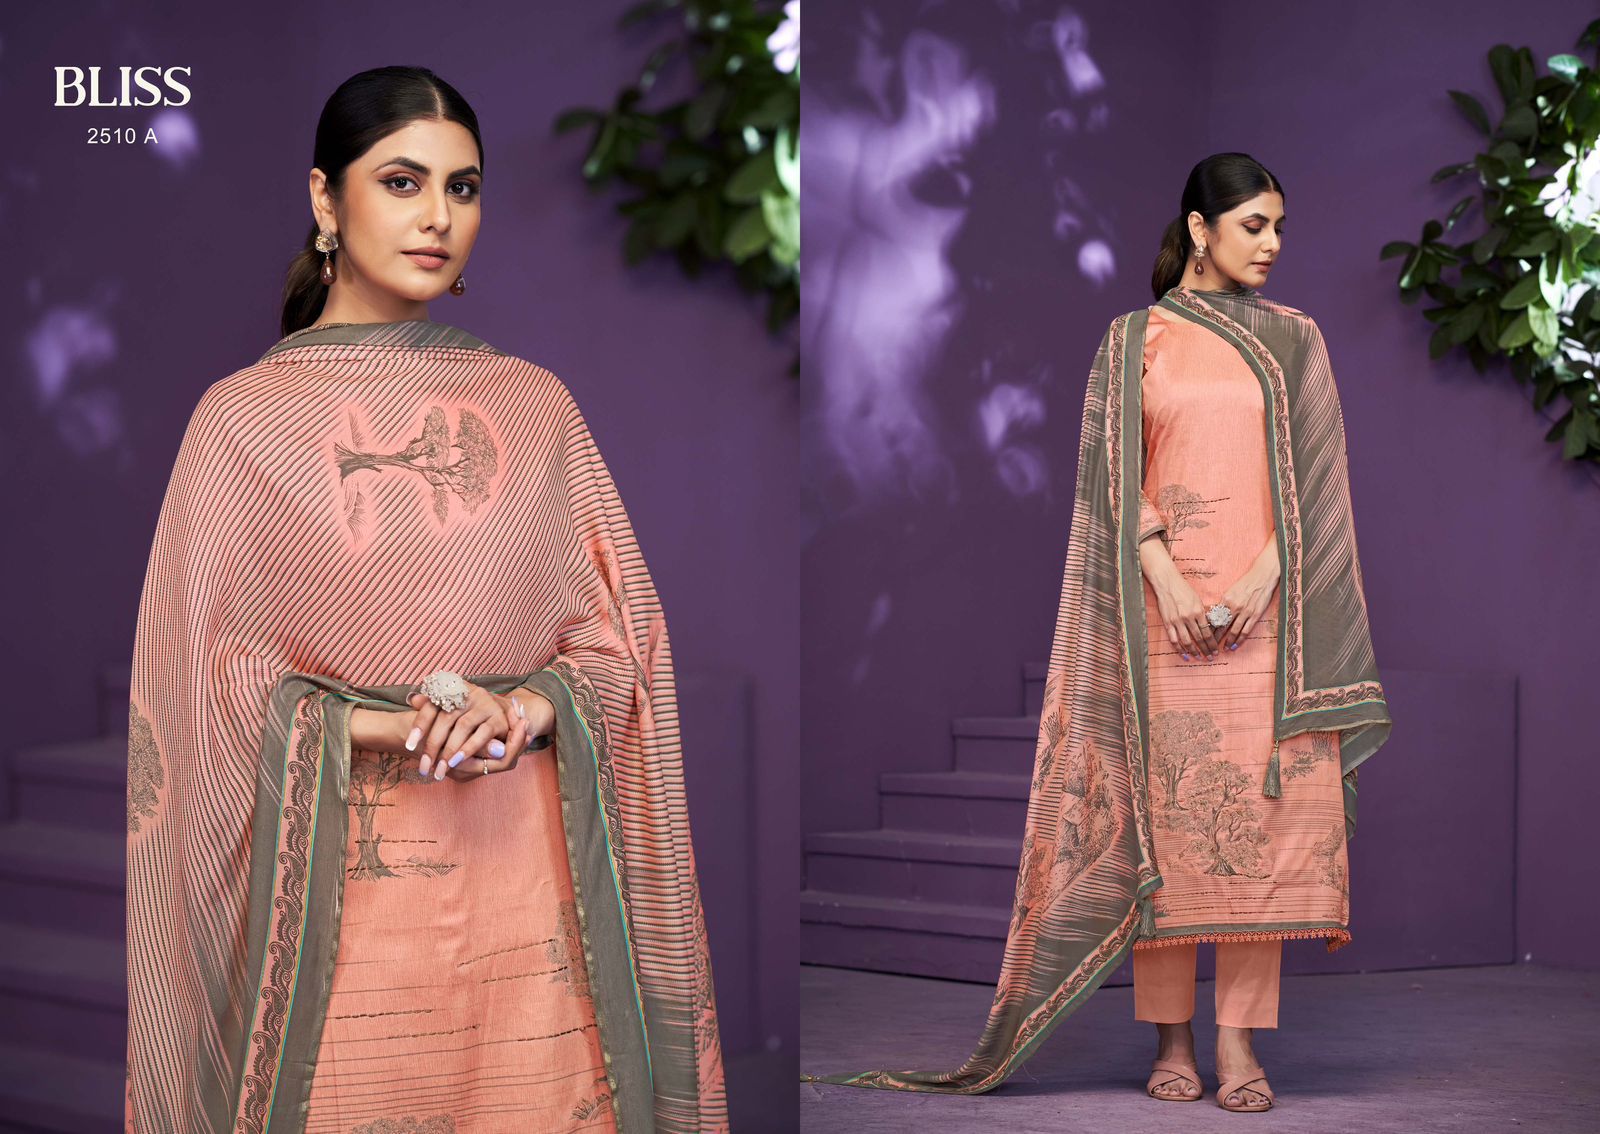 Bliss Sargam Prints Pure Jam Pant Style Suits Manufacturer Ahmedabad